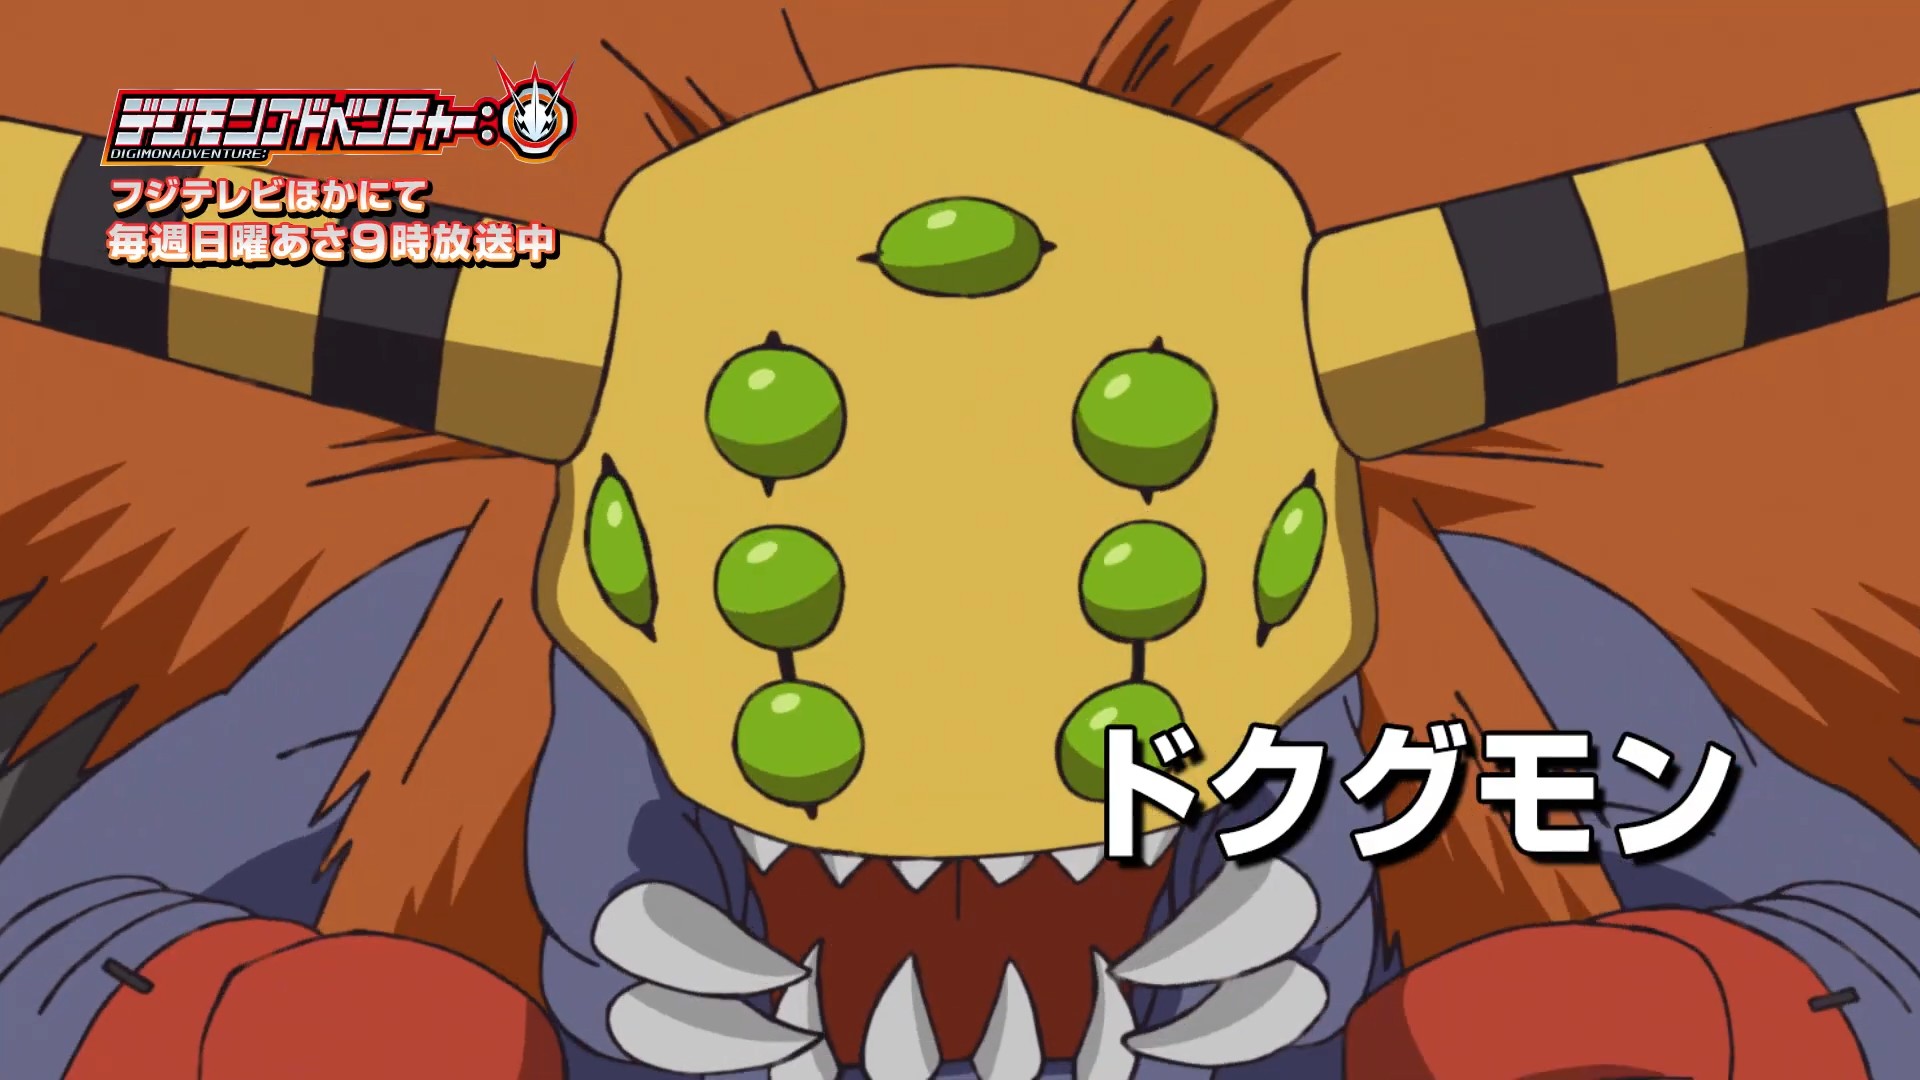 Tópico Oficial) - DIGIMON - Novo filme anunciado: Digimon